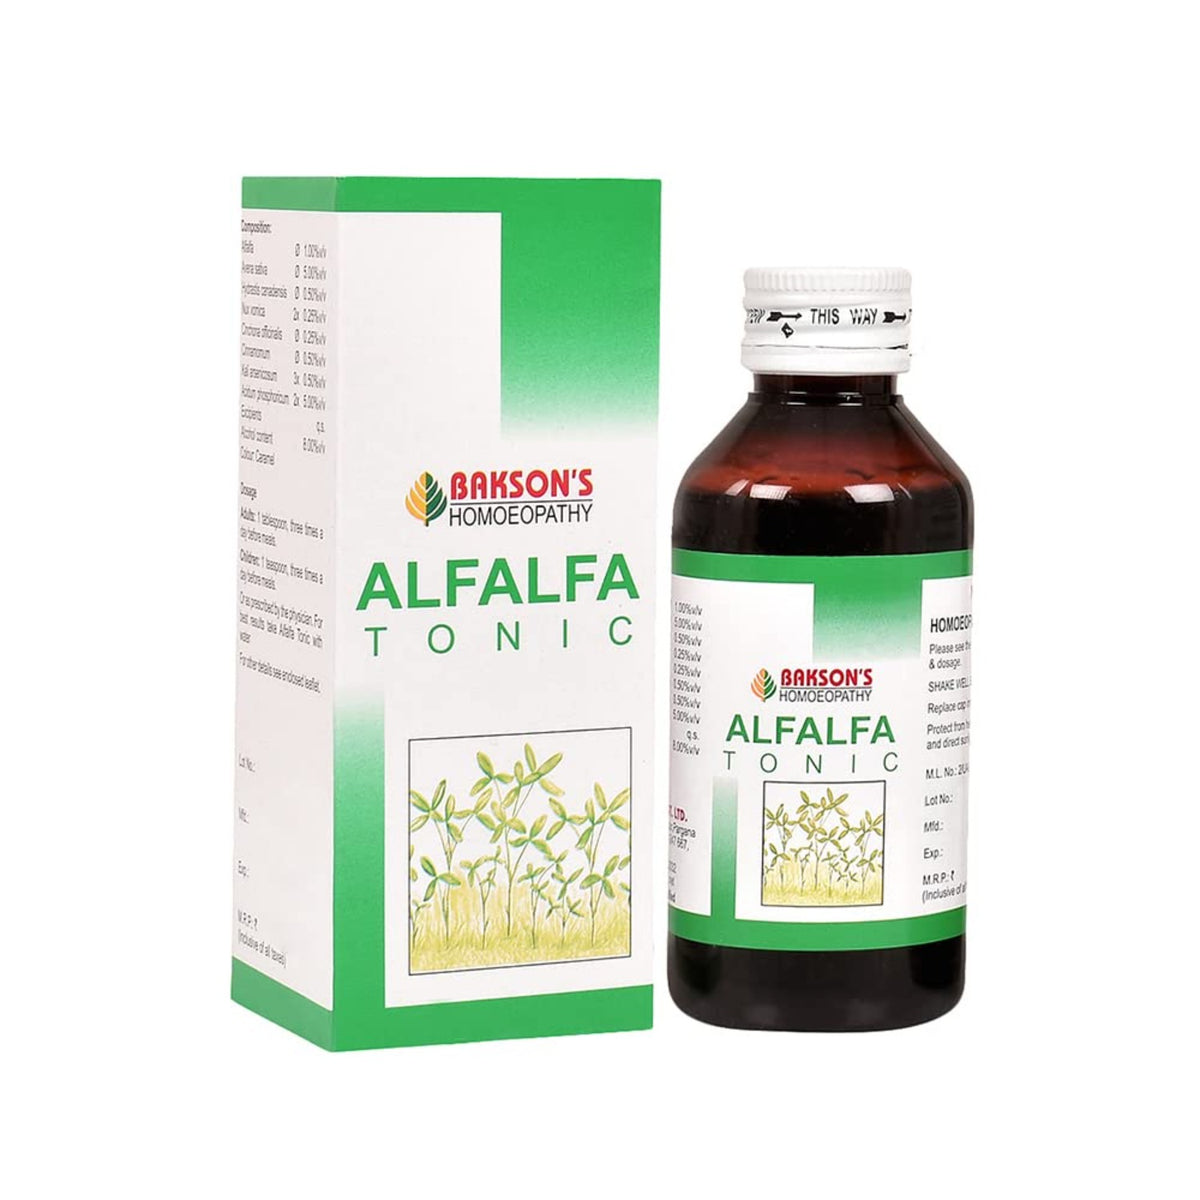 Bakson's Homoeopathy Alfalfa Tonic Promotes Health Liquid Syrup